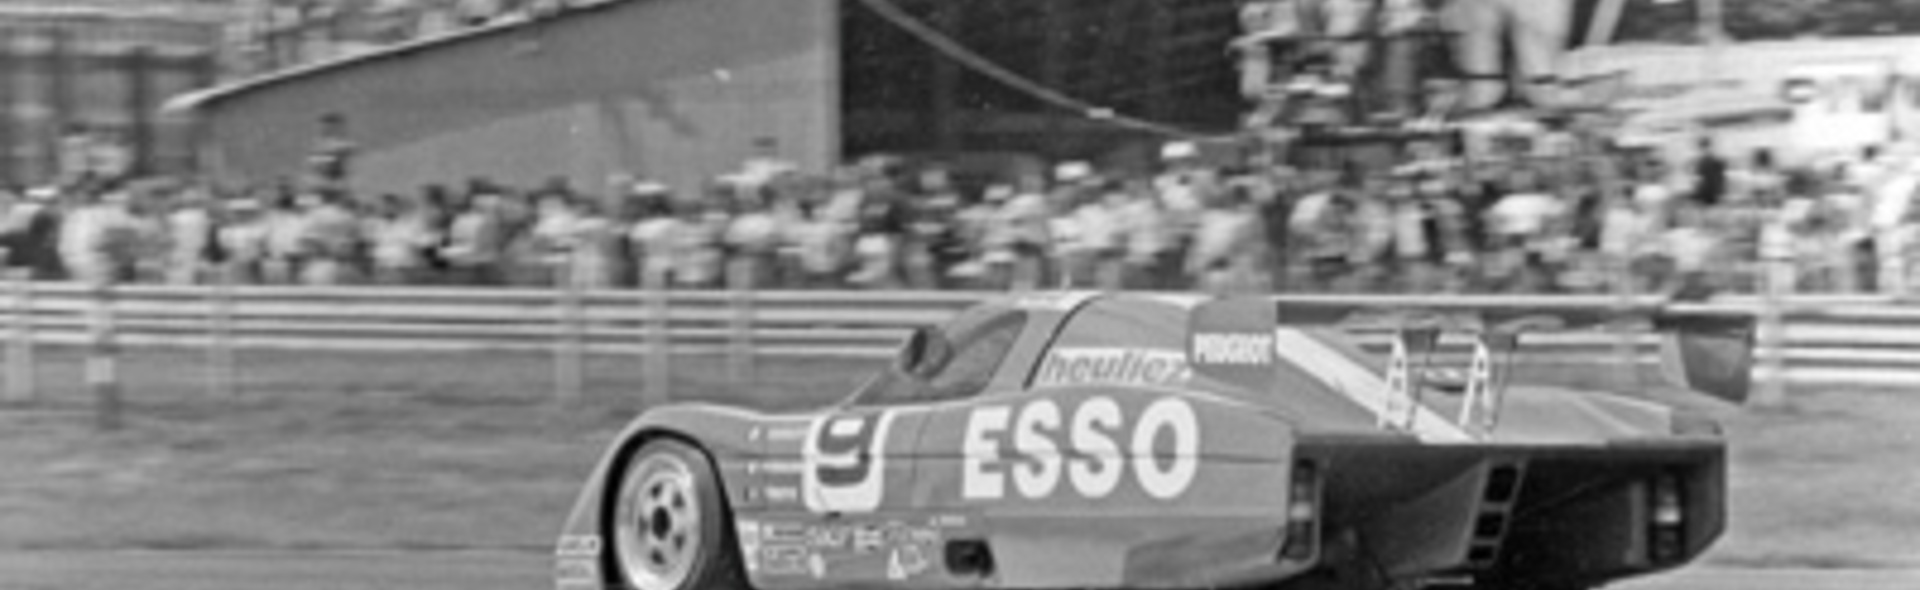 Banner Welter Racing